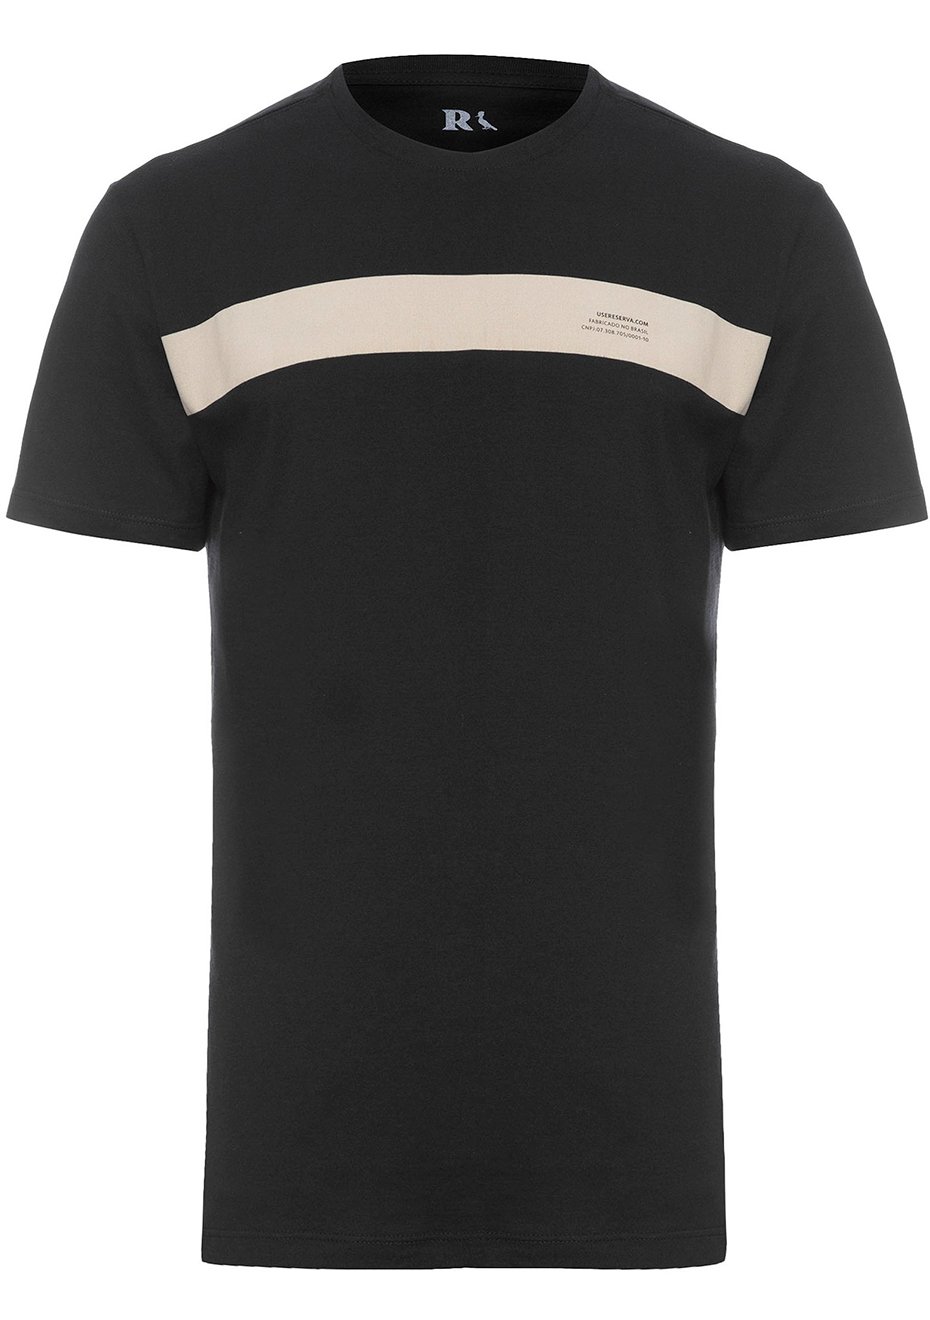 Camiseta Reserva Masculina Tarja Print Preta